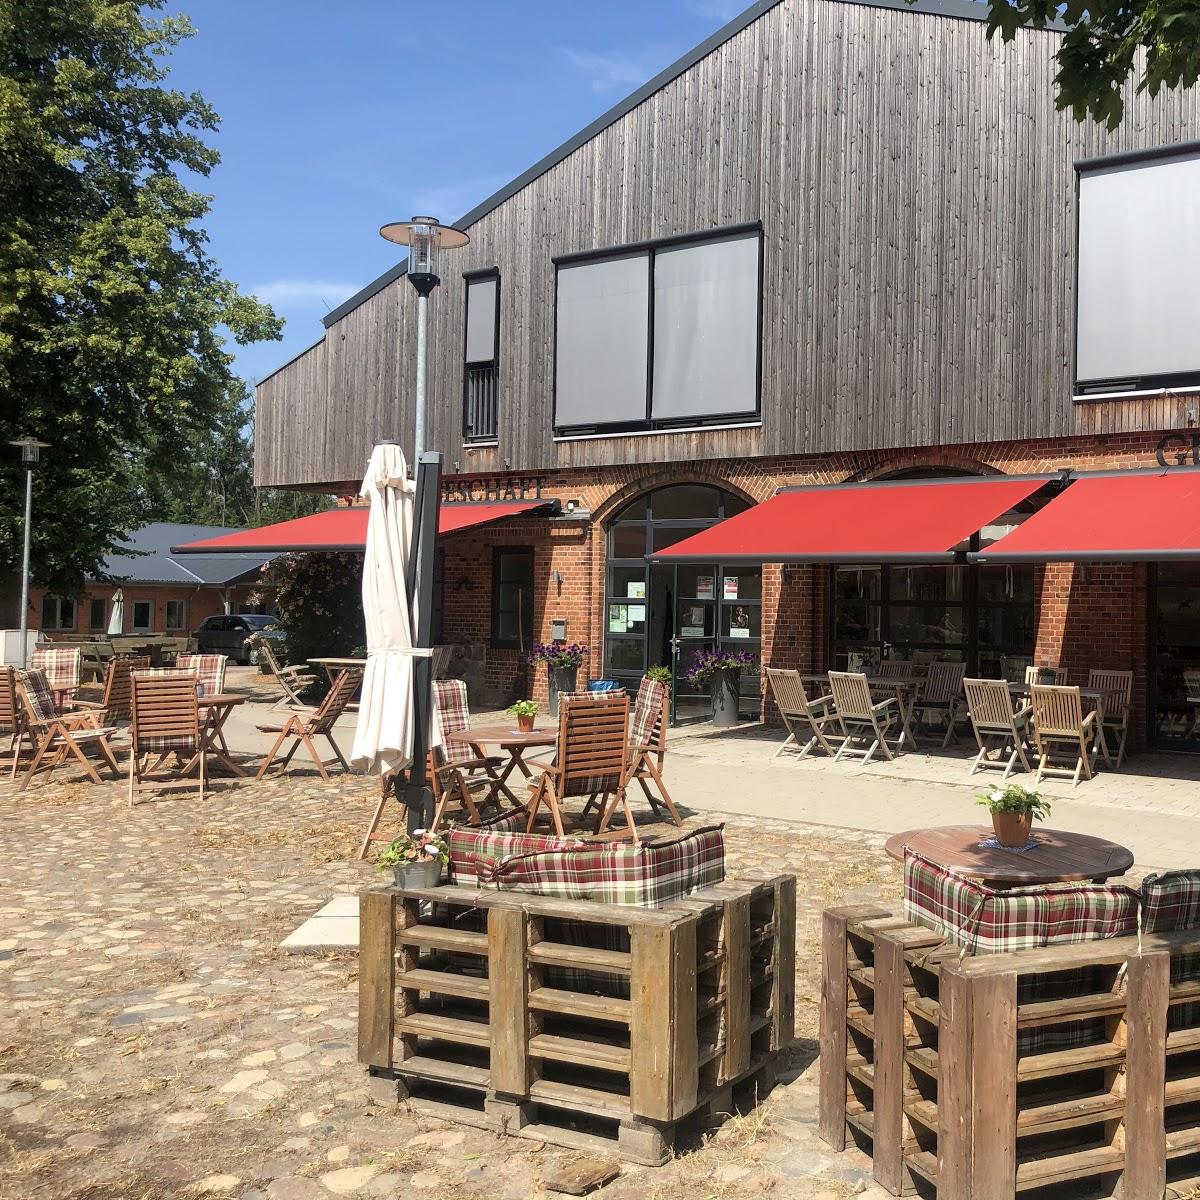 Restaurant "Gutscafe Stegen" in Bargfeld-Stegen